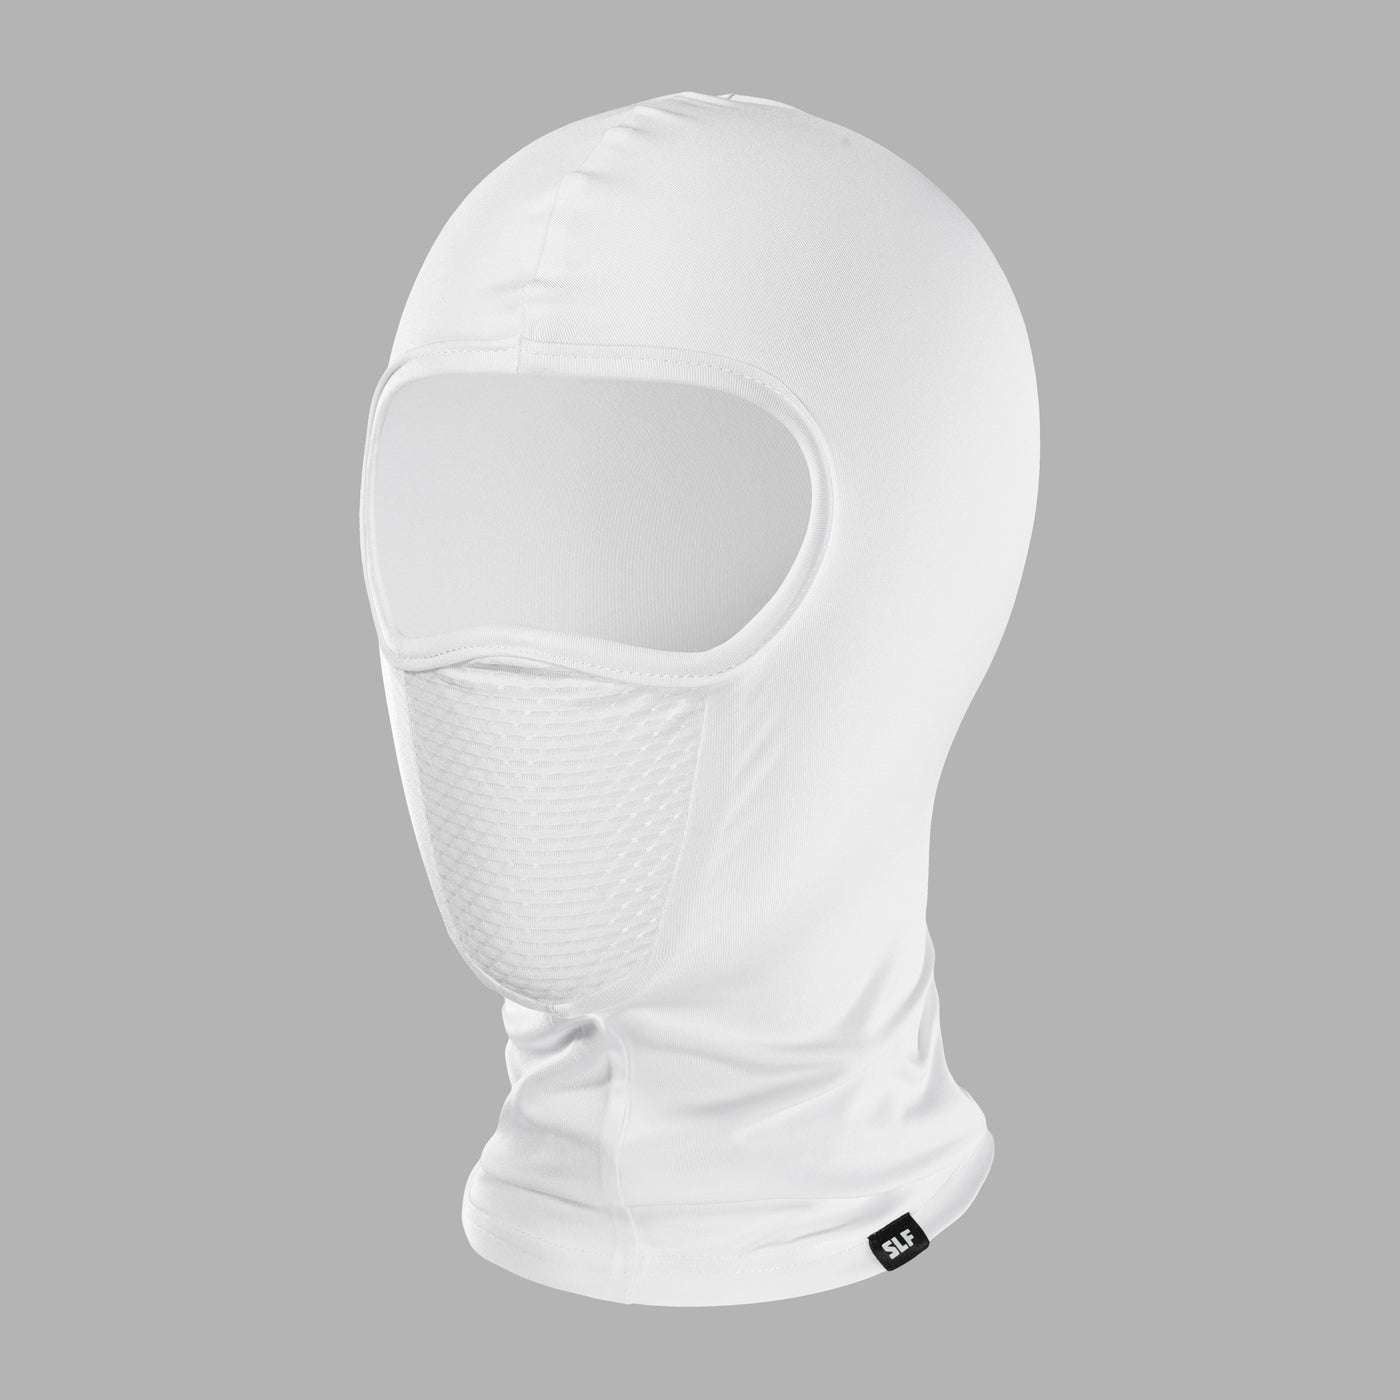 Basic White Shiesty Mask